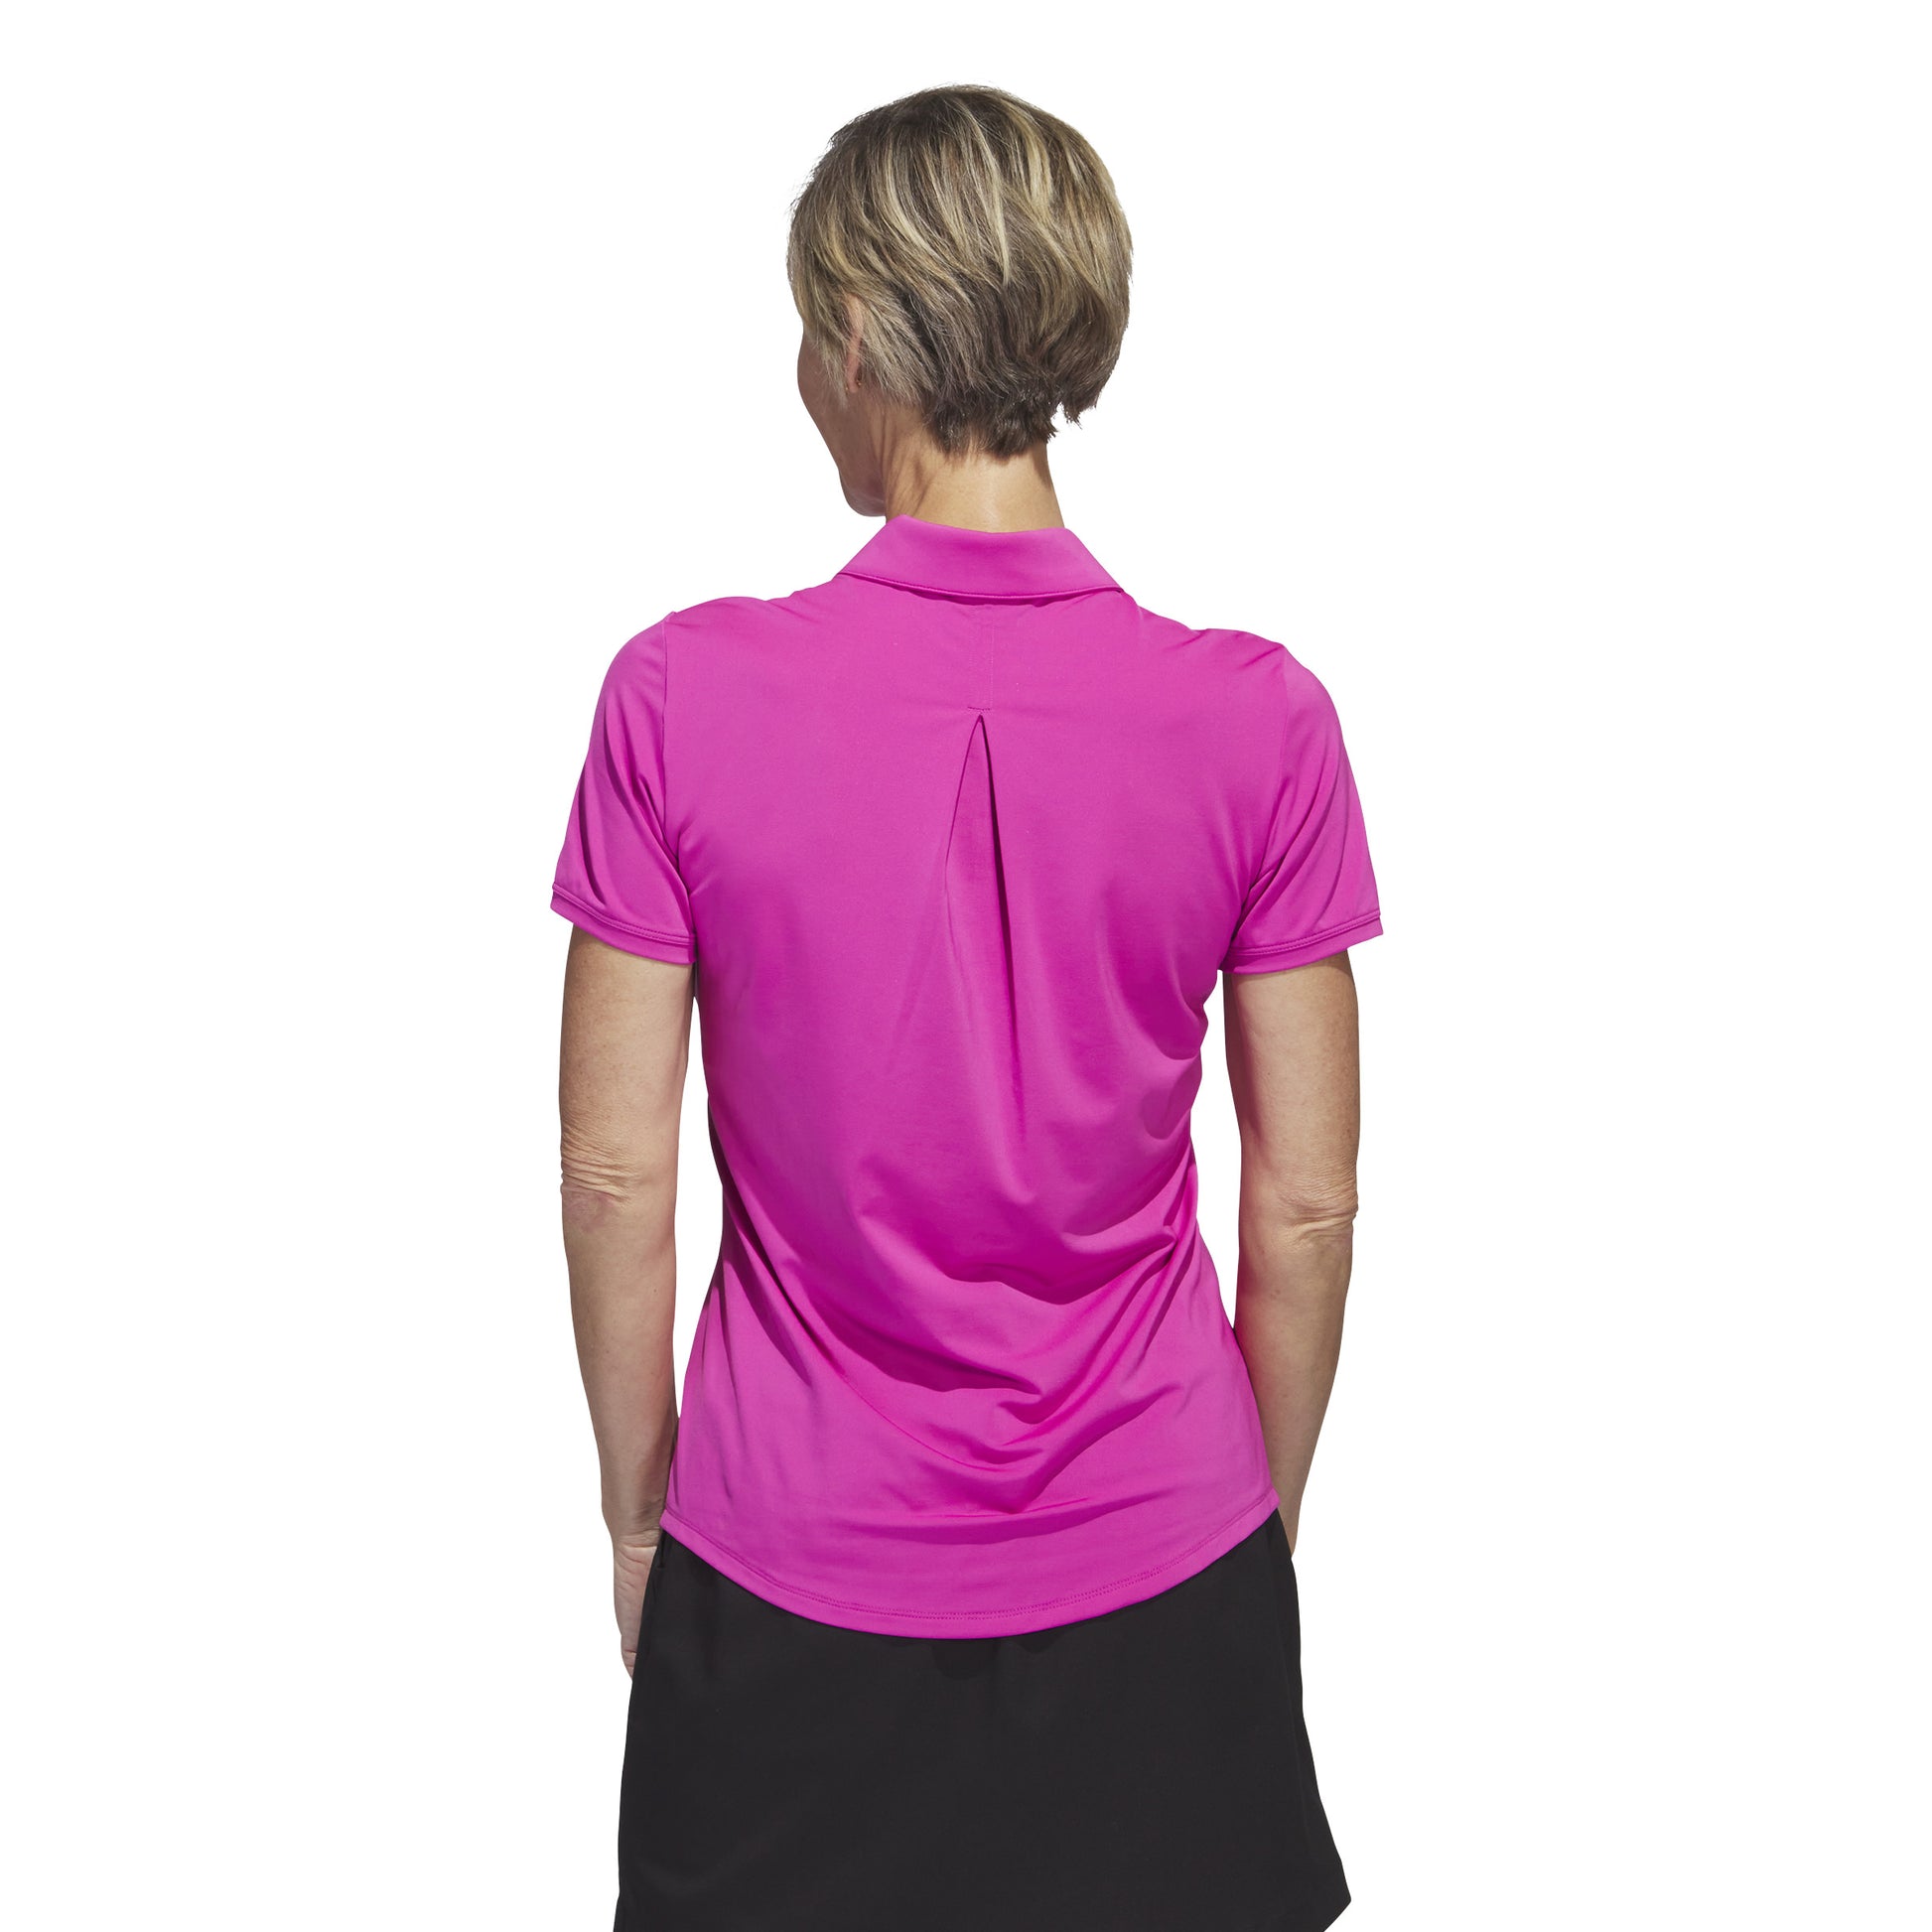 adidas Ladies Short Sleeve Golf Polo in Lucid Fuchsia